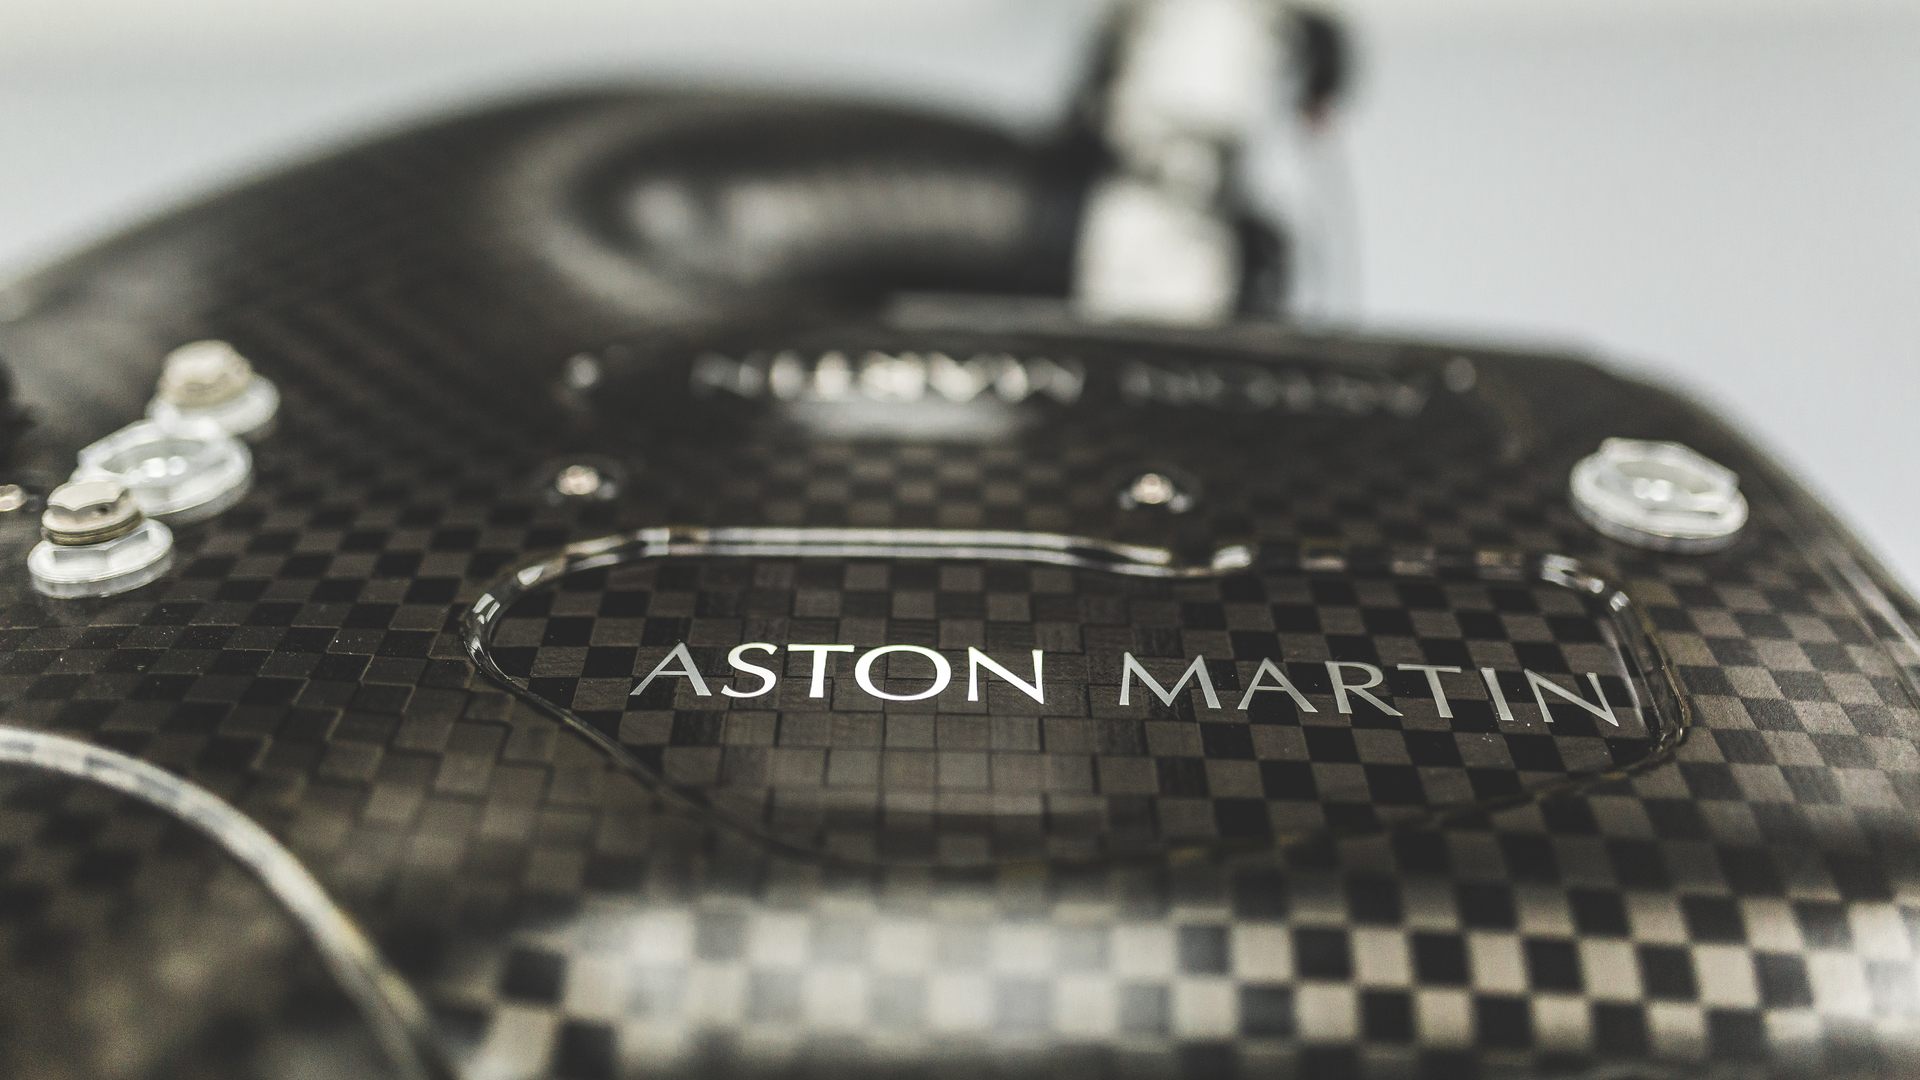 Aston Martin Valkyrie V12 Cosworth engine